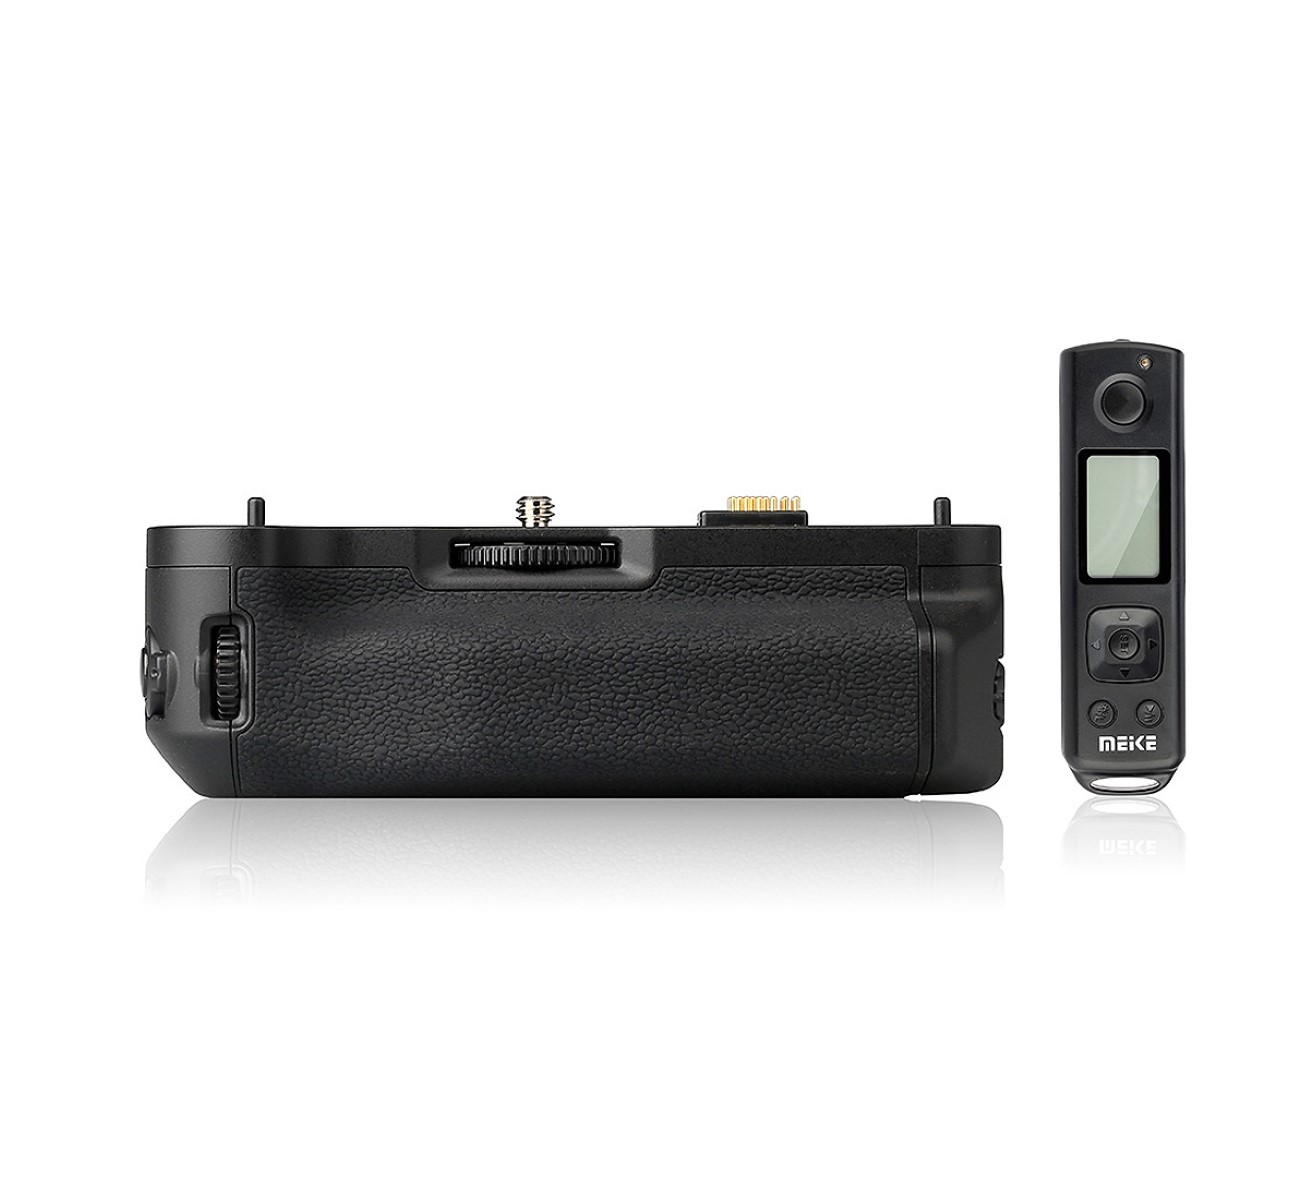 MEIKE Batteriegriff Fujifilm X-T1 Batteriegriff mit VG-XT1, Funk-Timer-Fernauslöser Black ähnlich Funk-Timer-Fernauslöser, mit